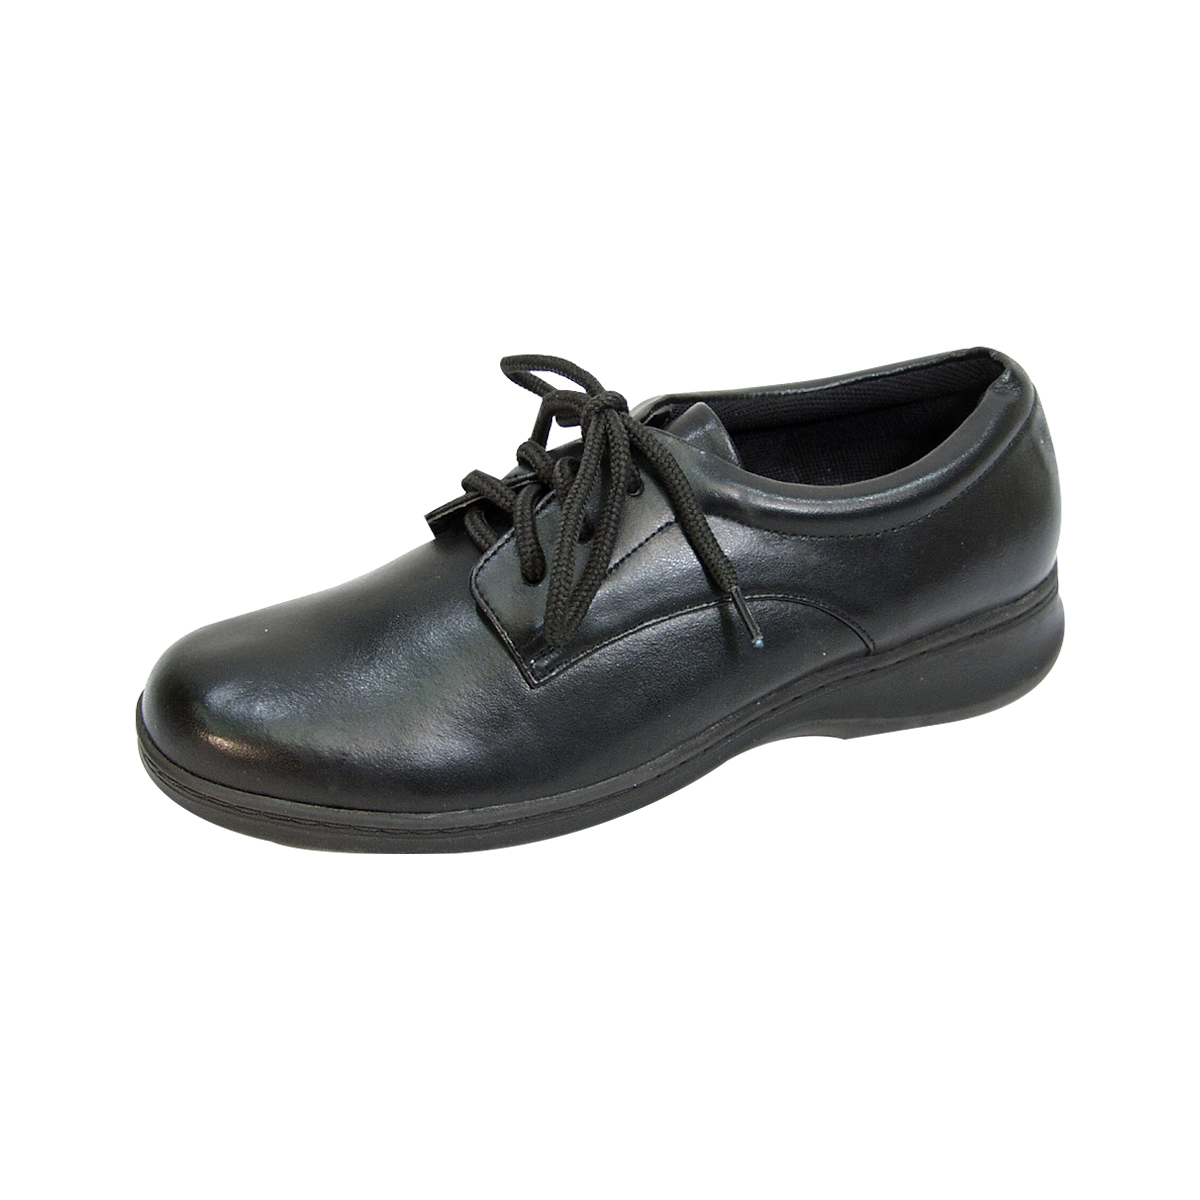 24 HOUR COMFORT Alice Wide Width Professional Sleek Shoe BLACK 12 - image 1 of 7